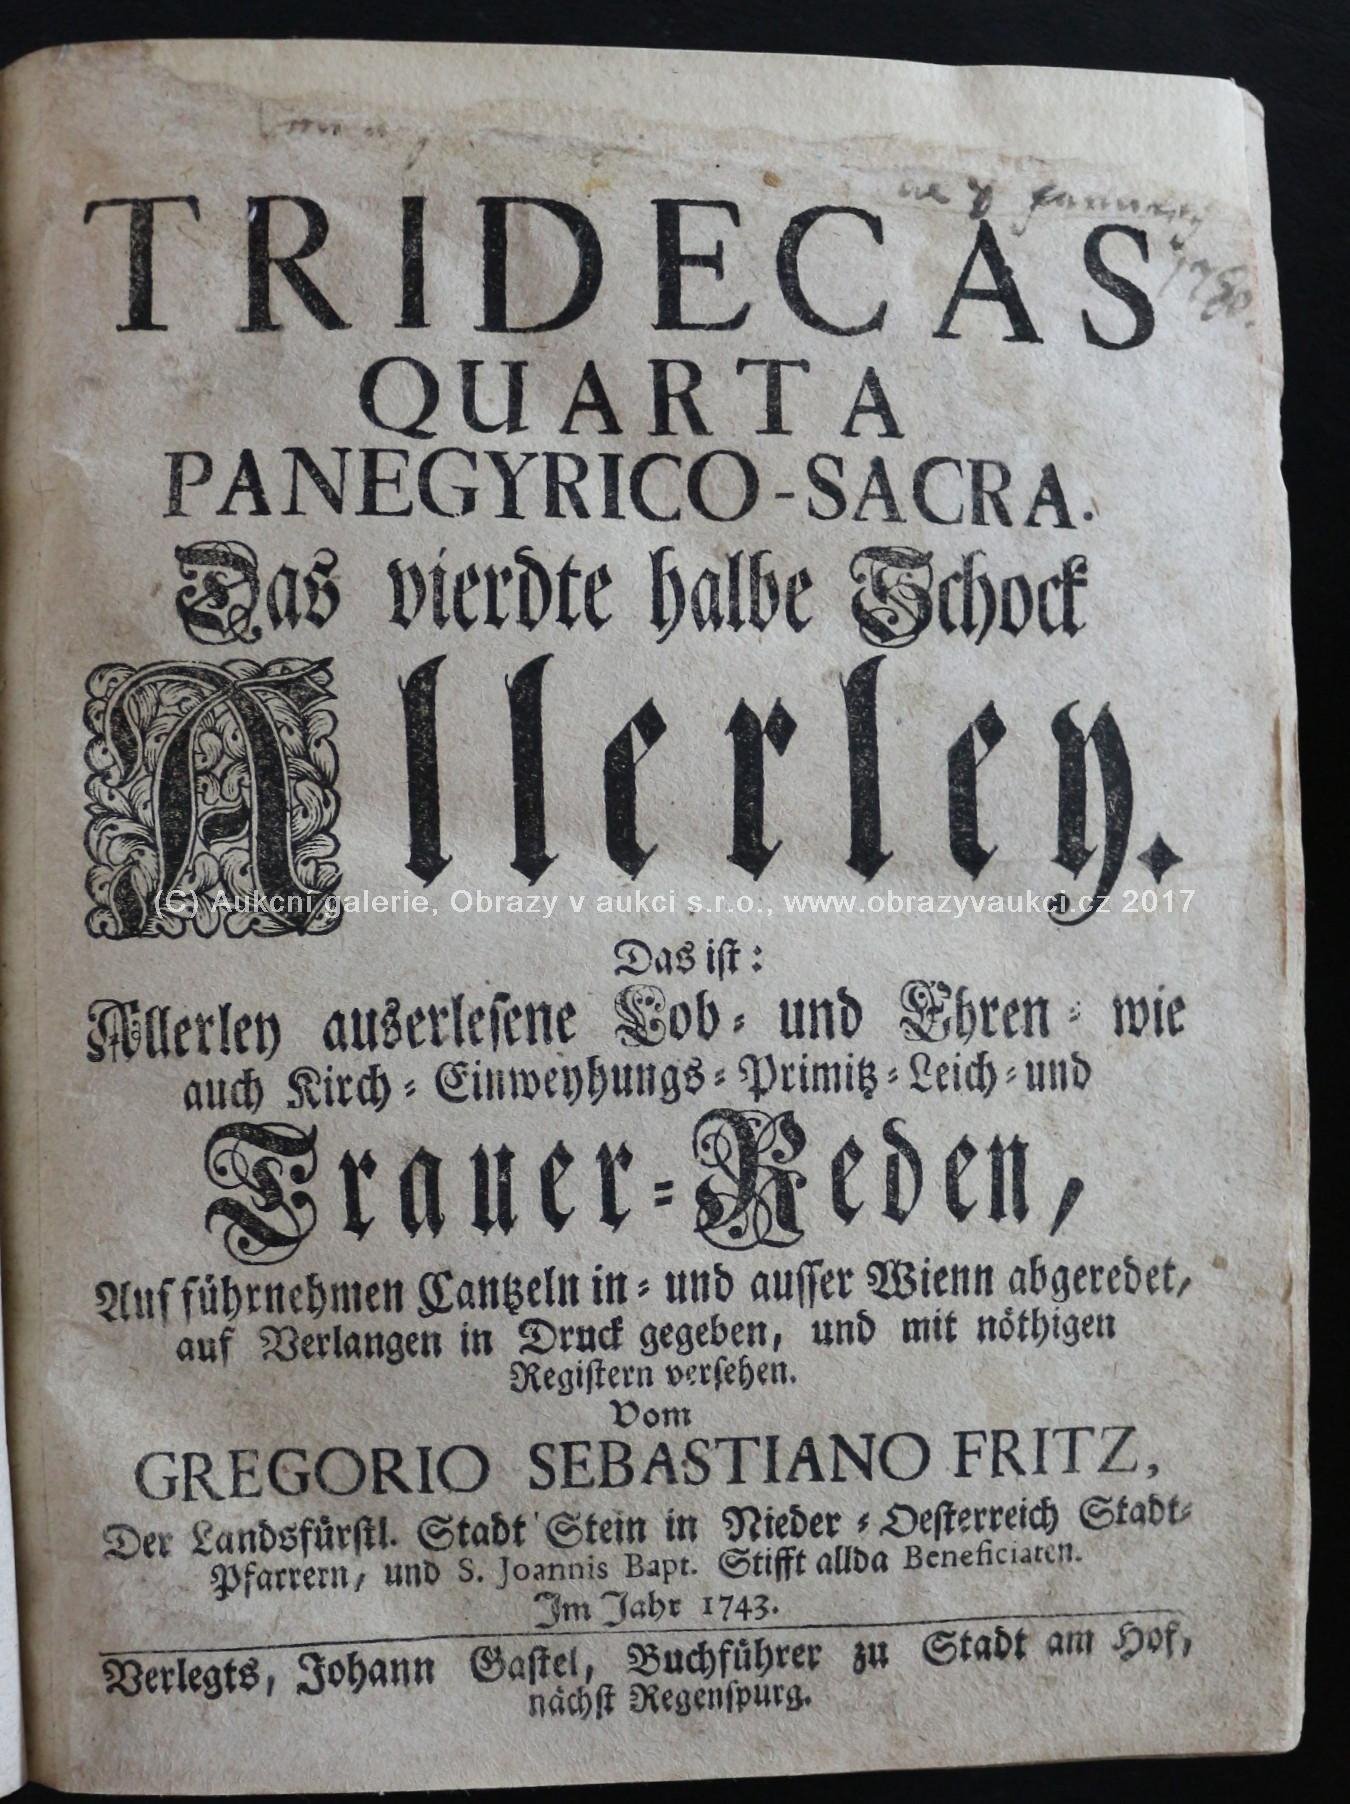 Gregorio Sebastiano Fritz - Tridecas quarta panegirico-sacra.Das vierdte halbe Schock Allerley